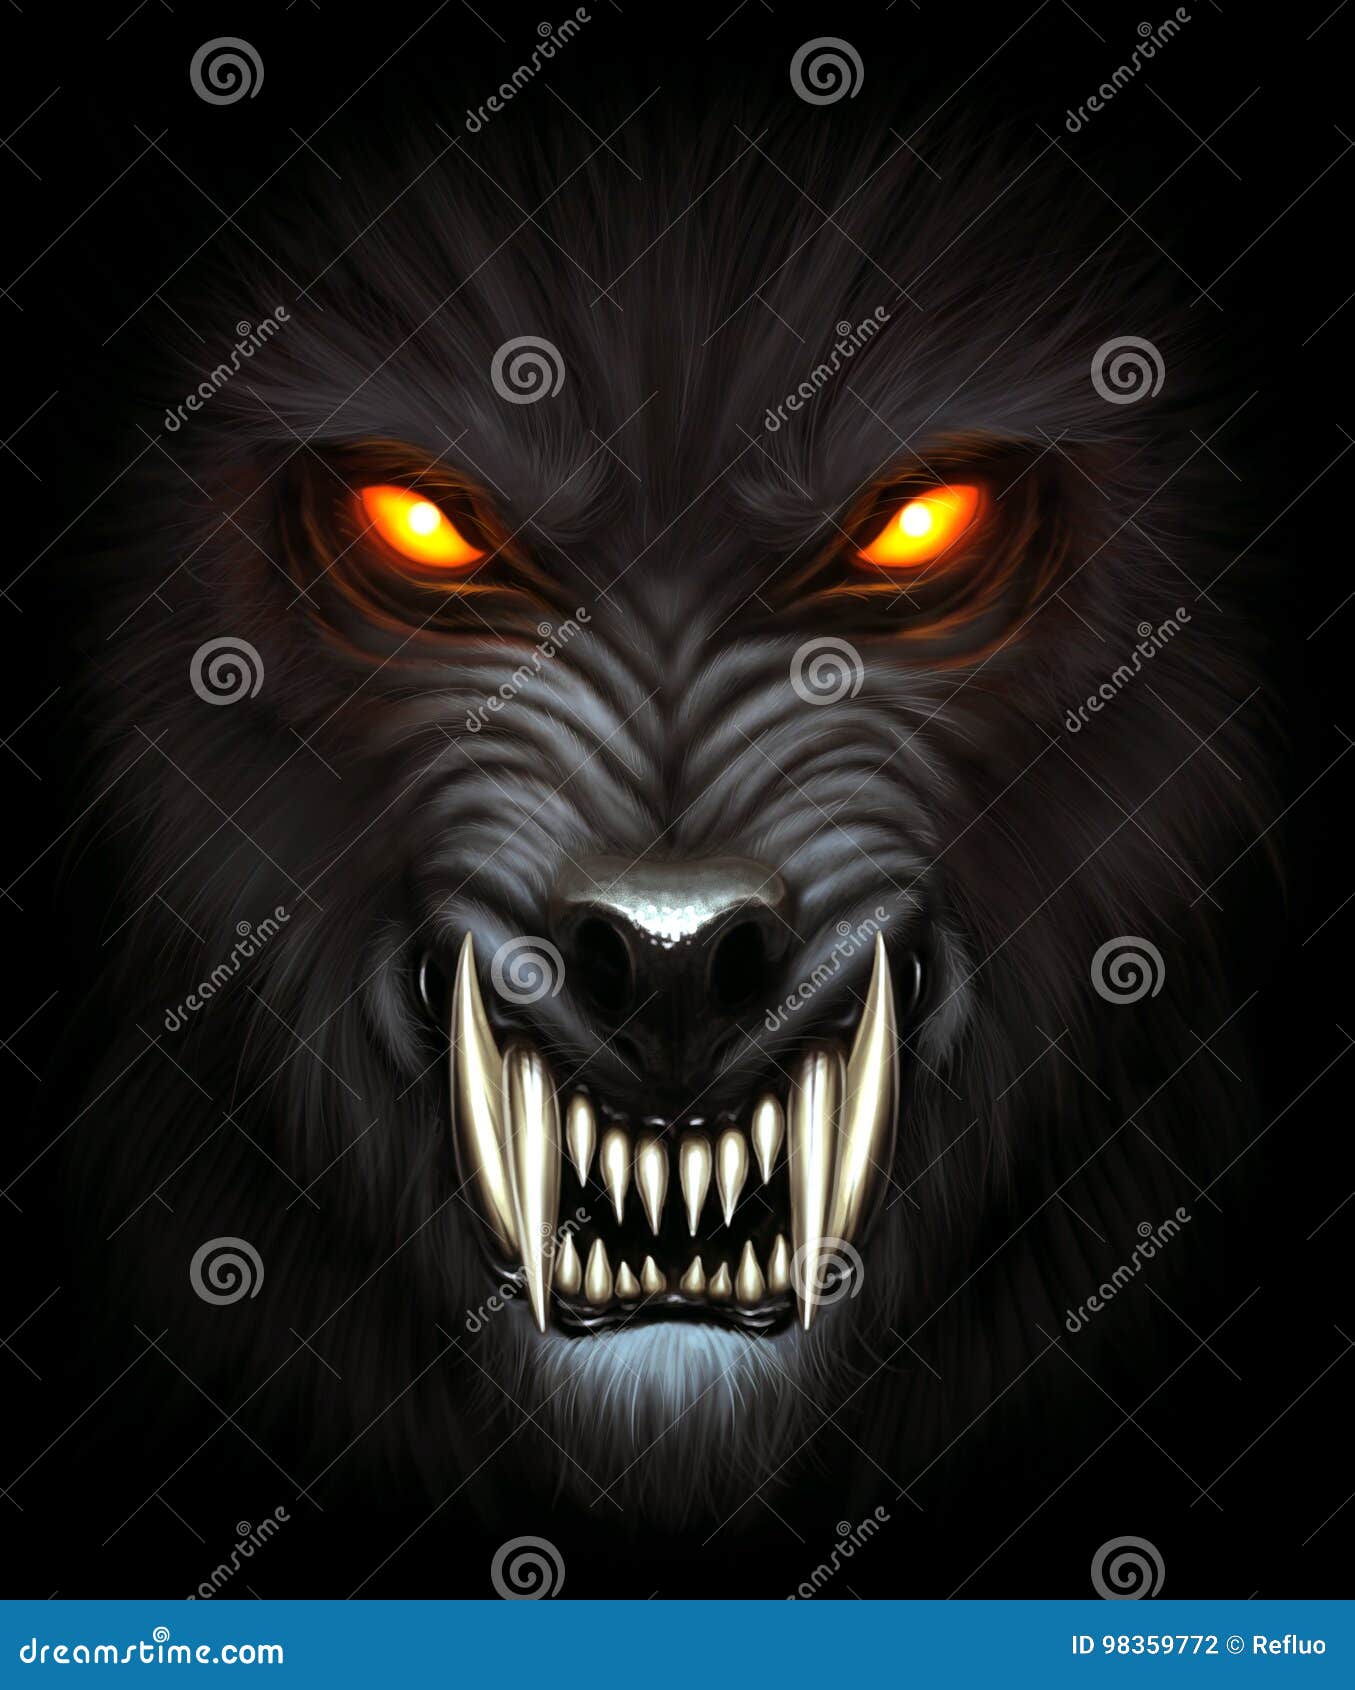 Hombre Lobo Werewolf Loup garou Werwolf 